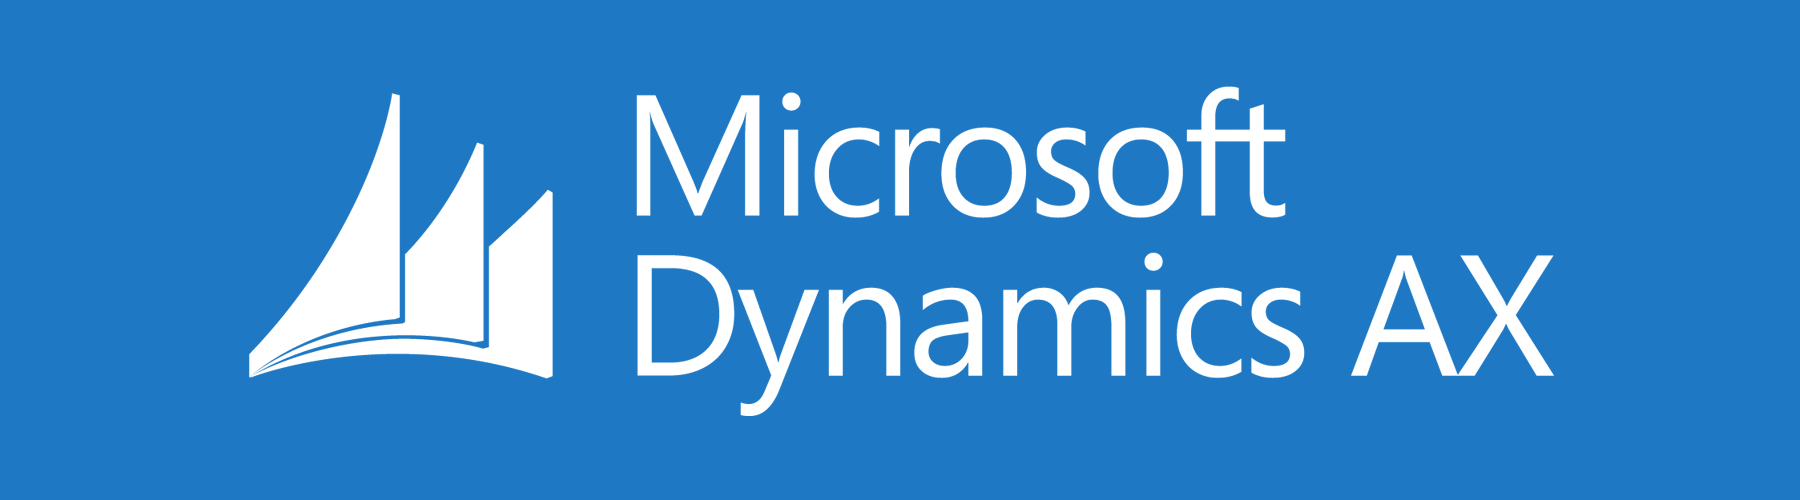 New Microsoft Dynamics Logo - Where can I find Dynamics AX logo Please? - Microsoft Dynamics AX ...